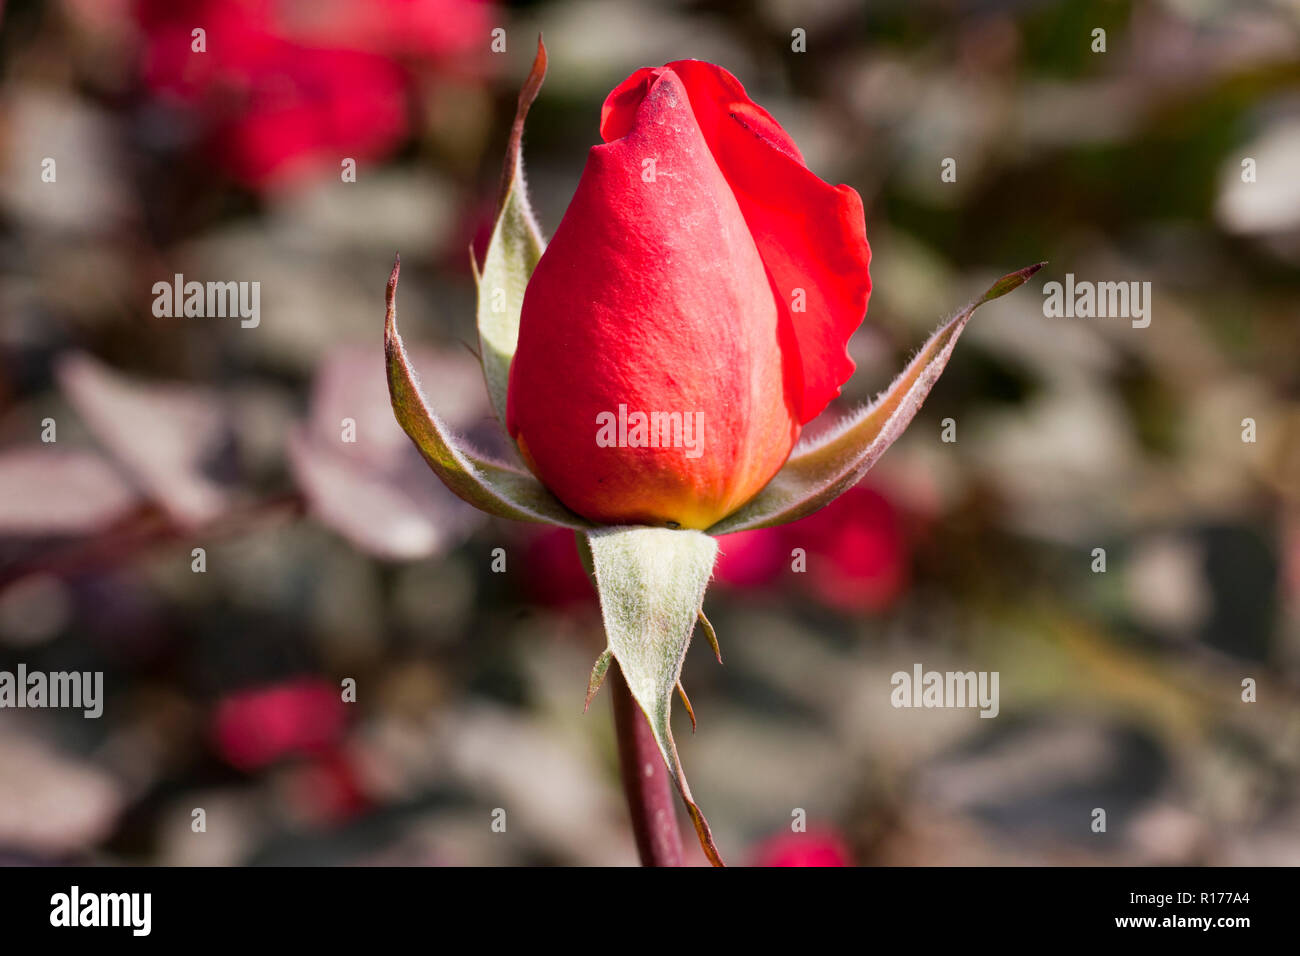 Rose also known as Golap, Gulab Rosa. Bangladesh. Stock Photo